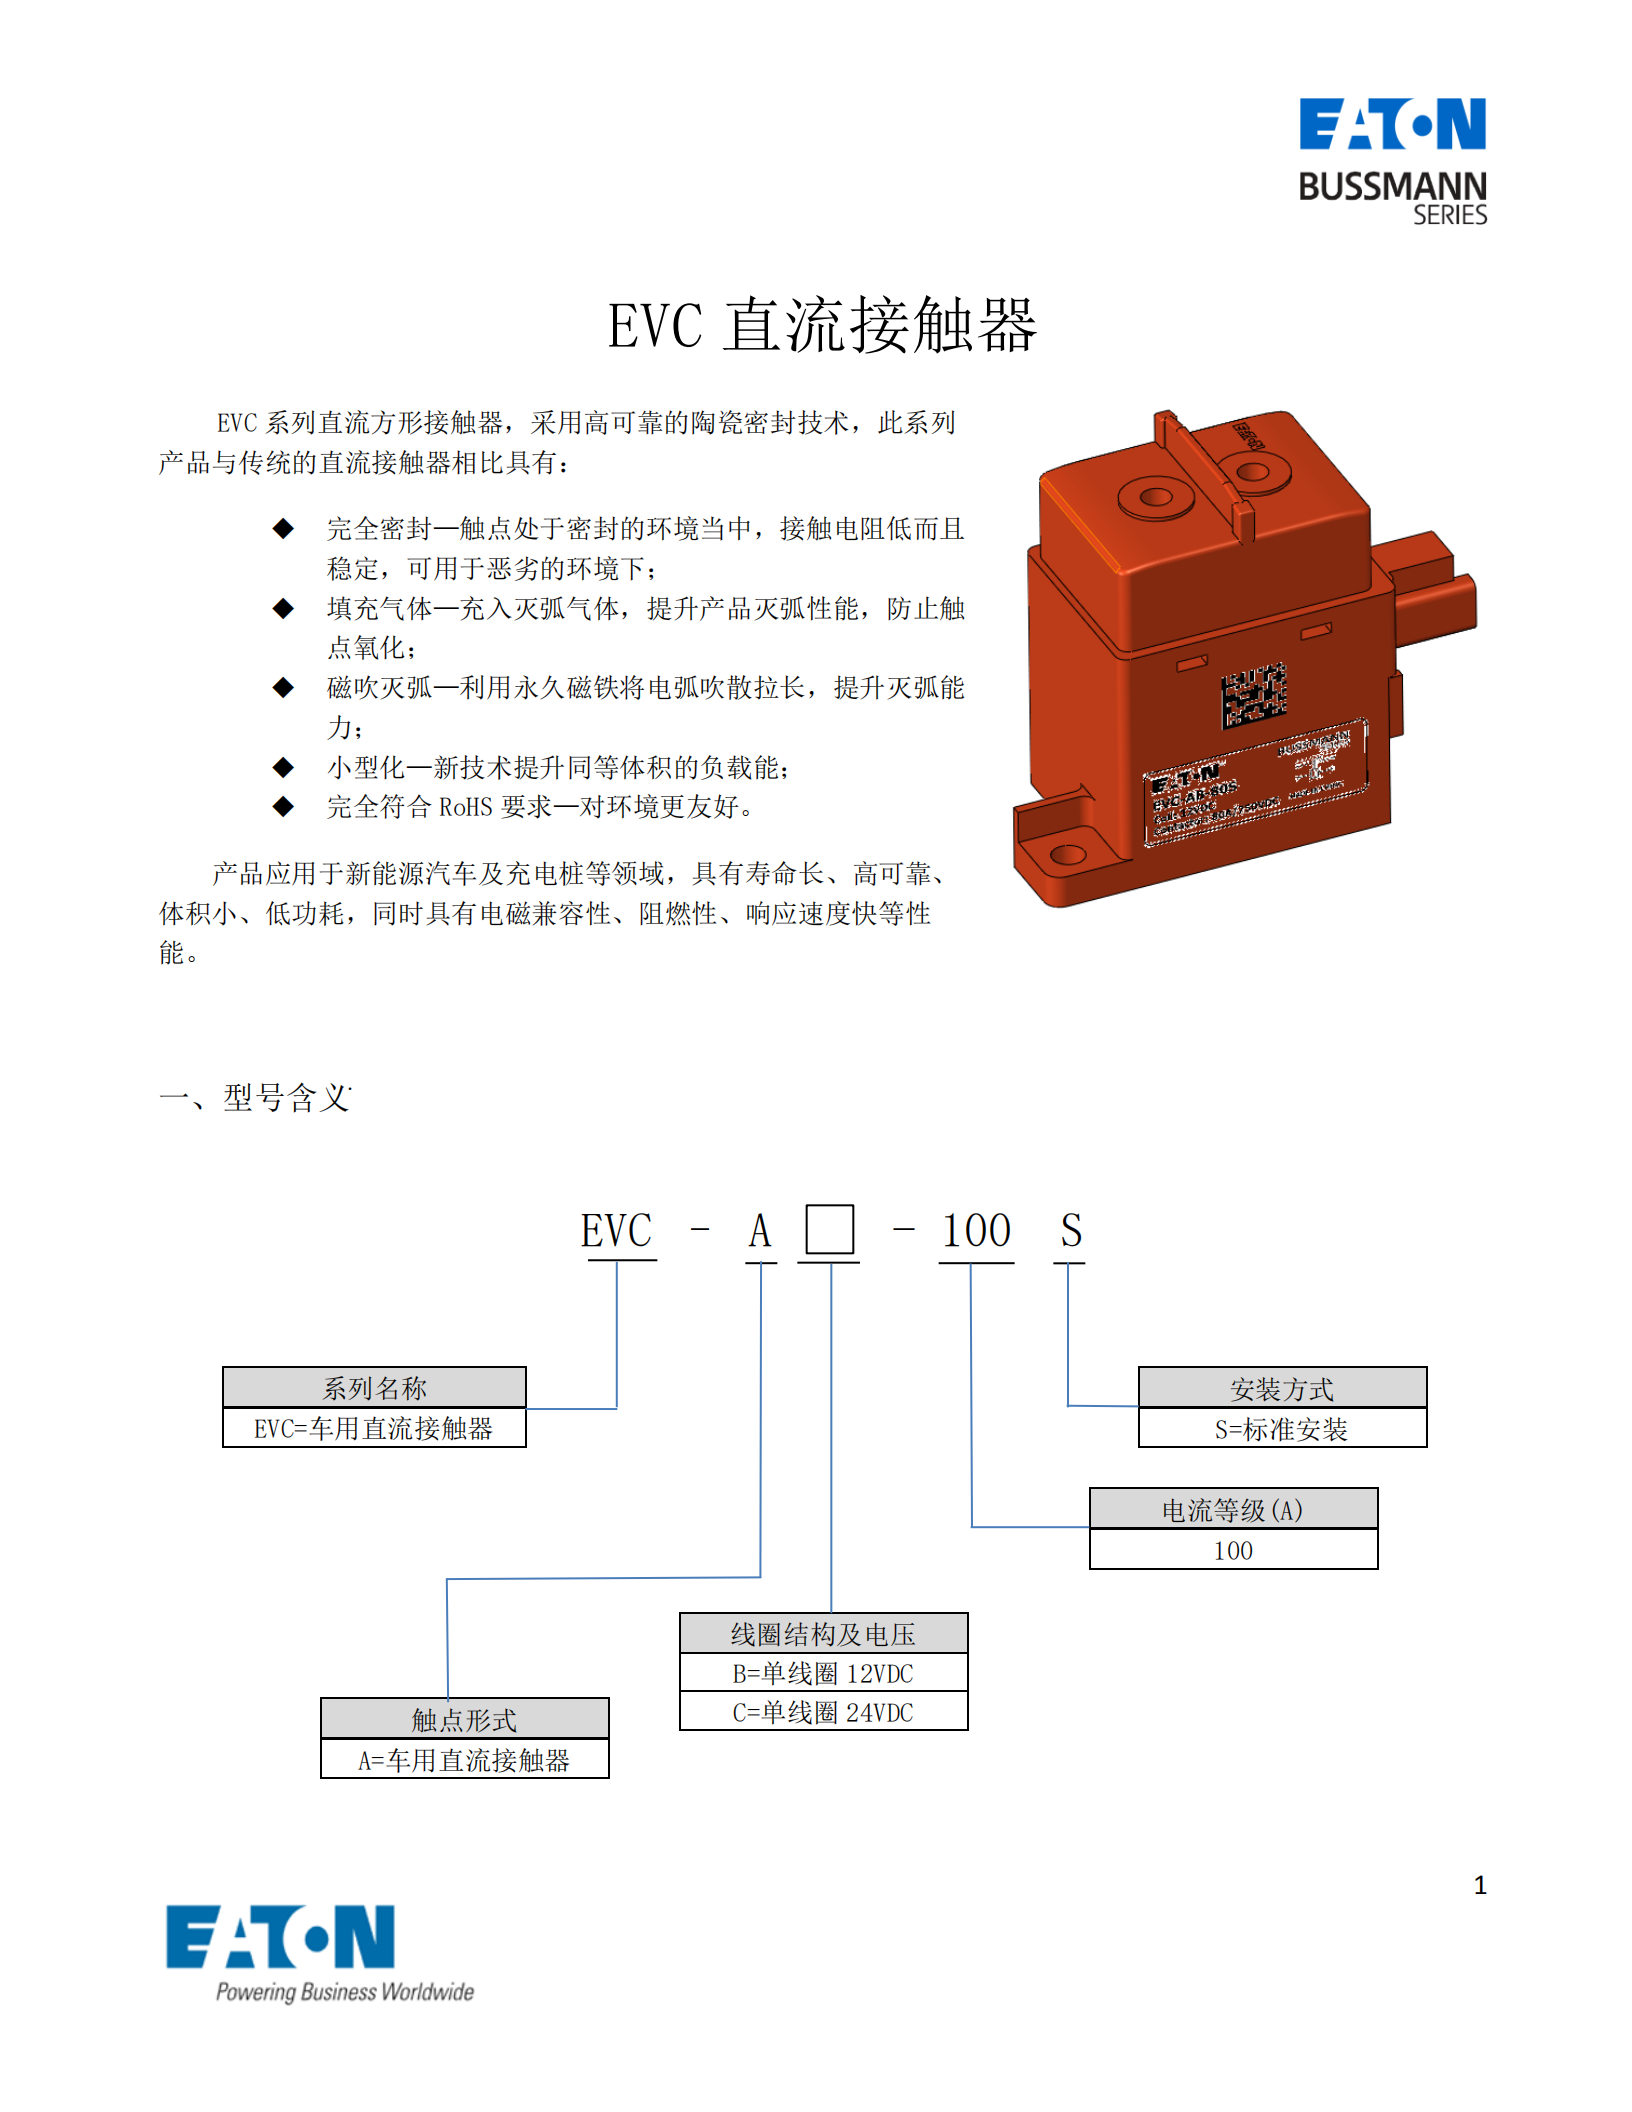 EVC-A-100S直流接觸器